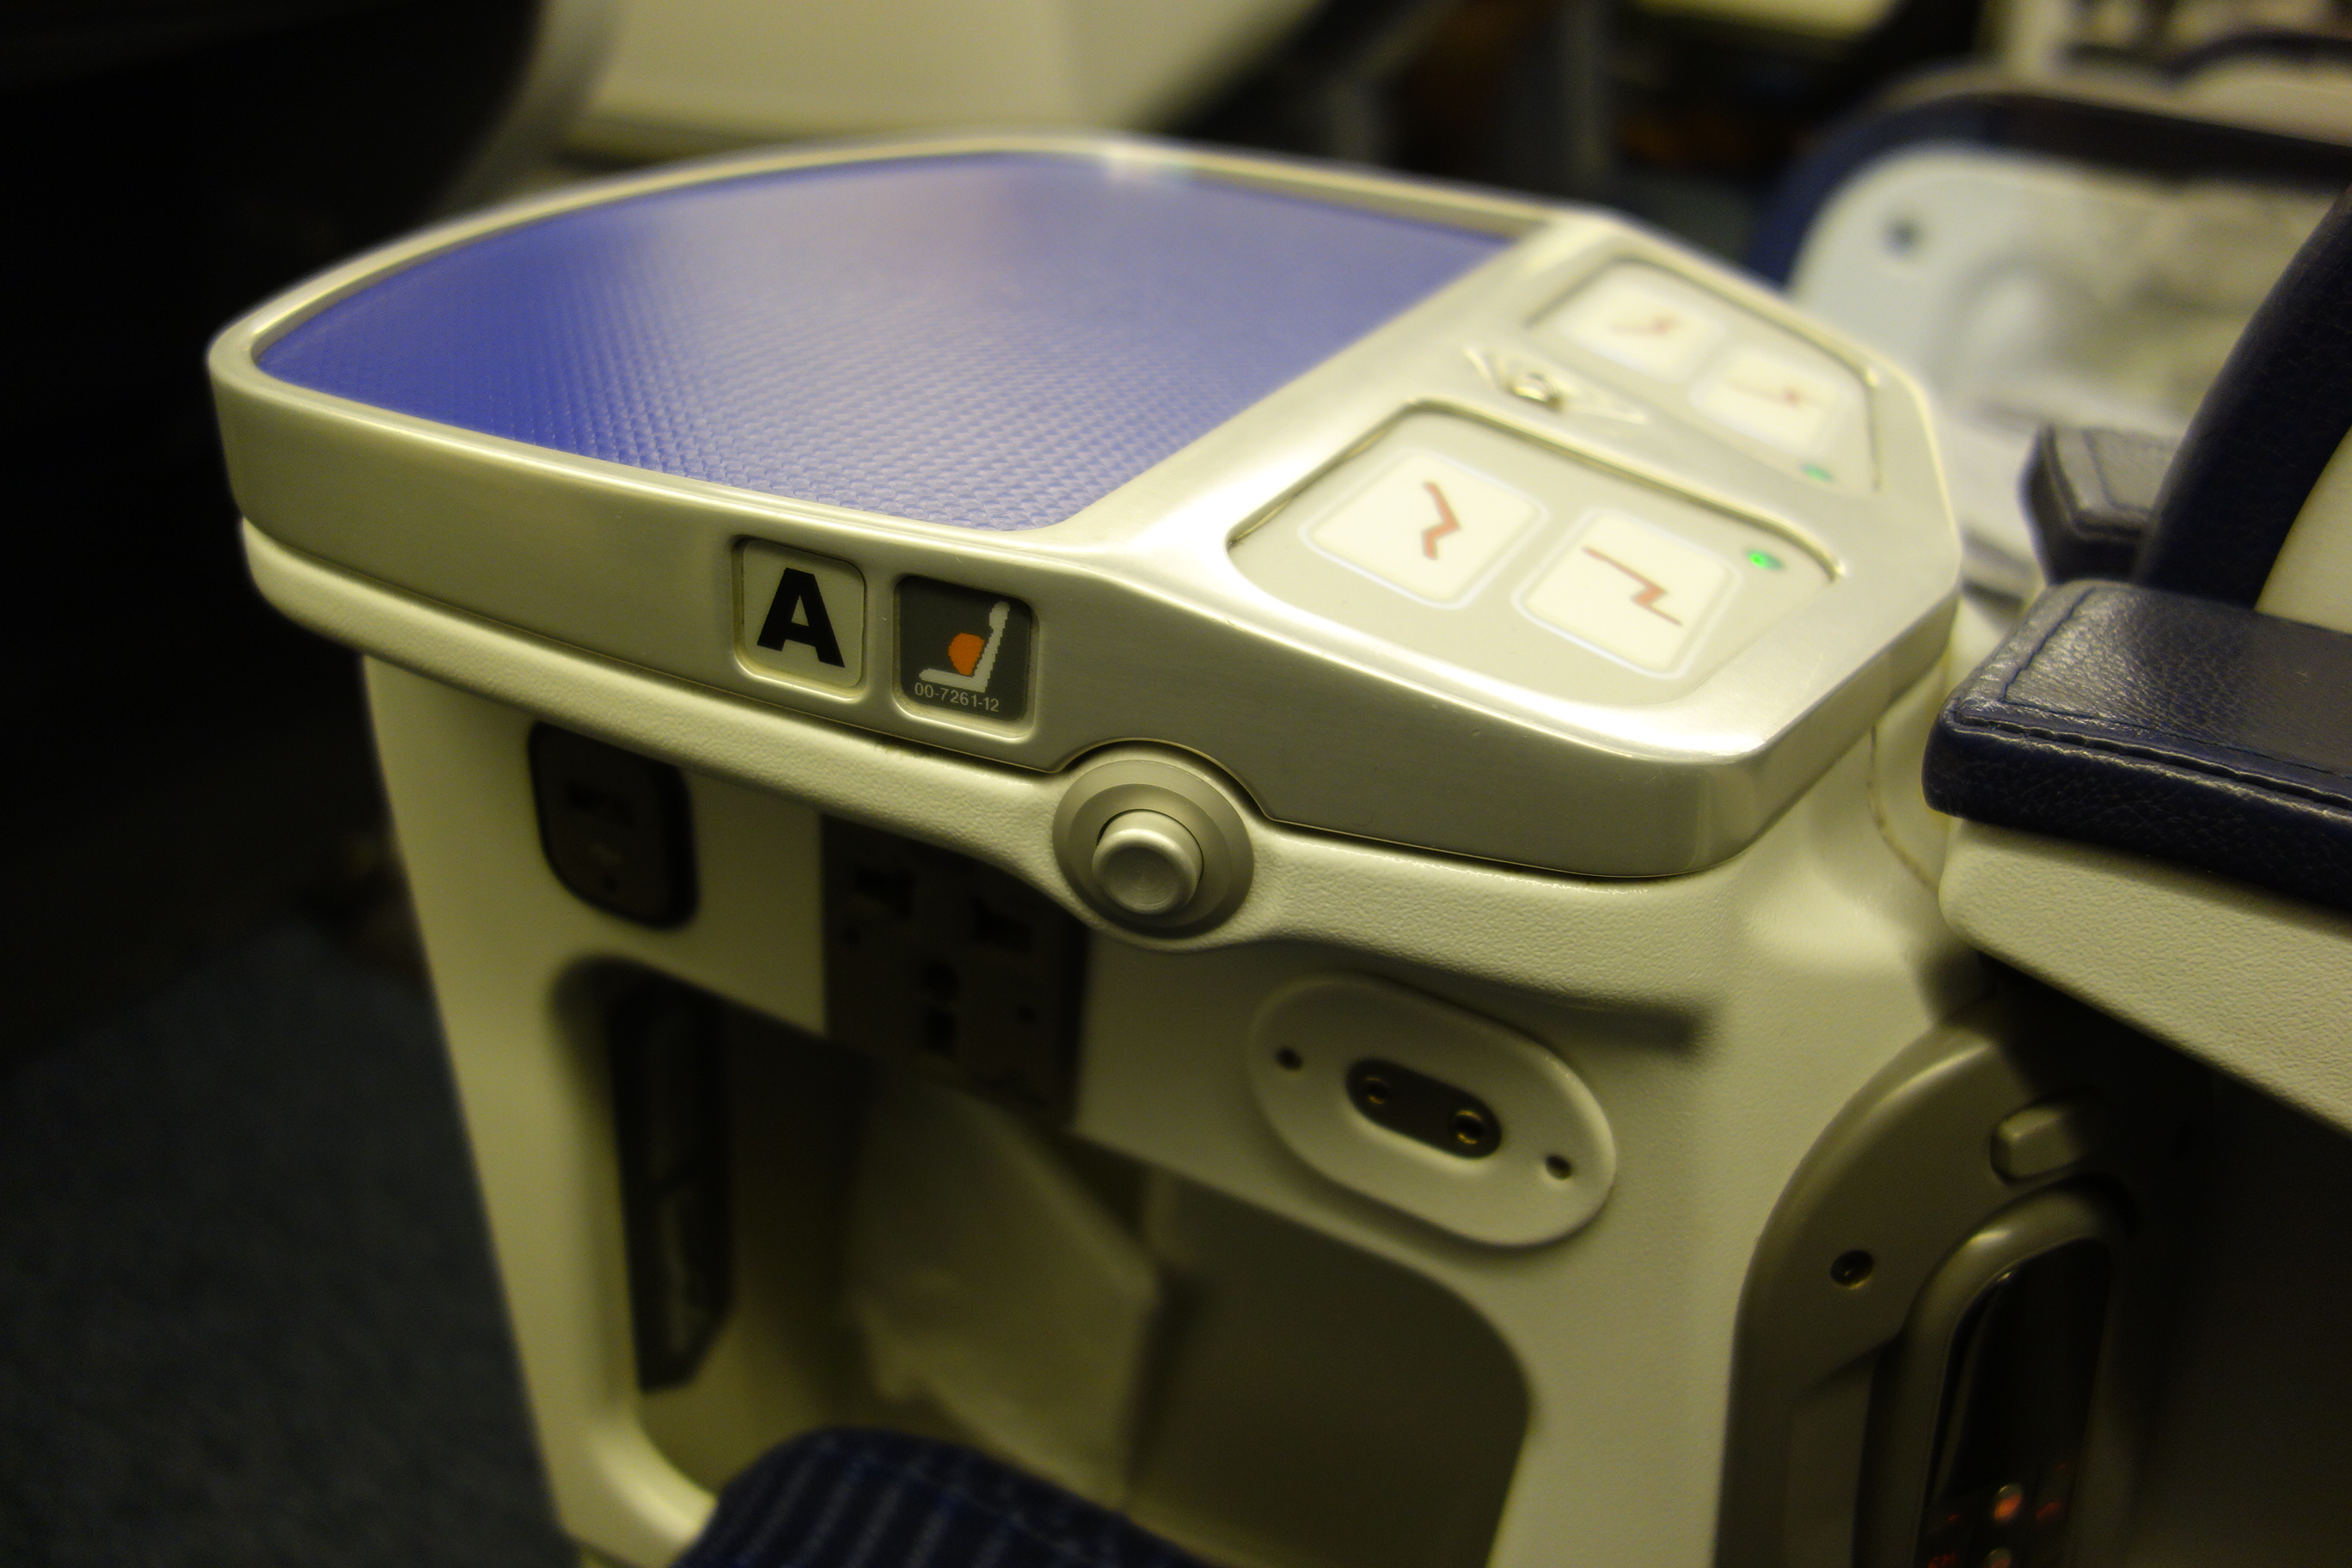 Basic seat controls